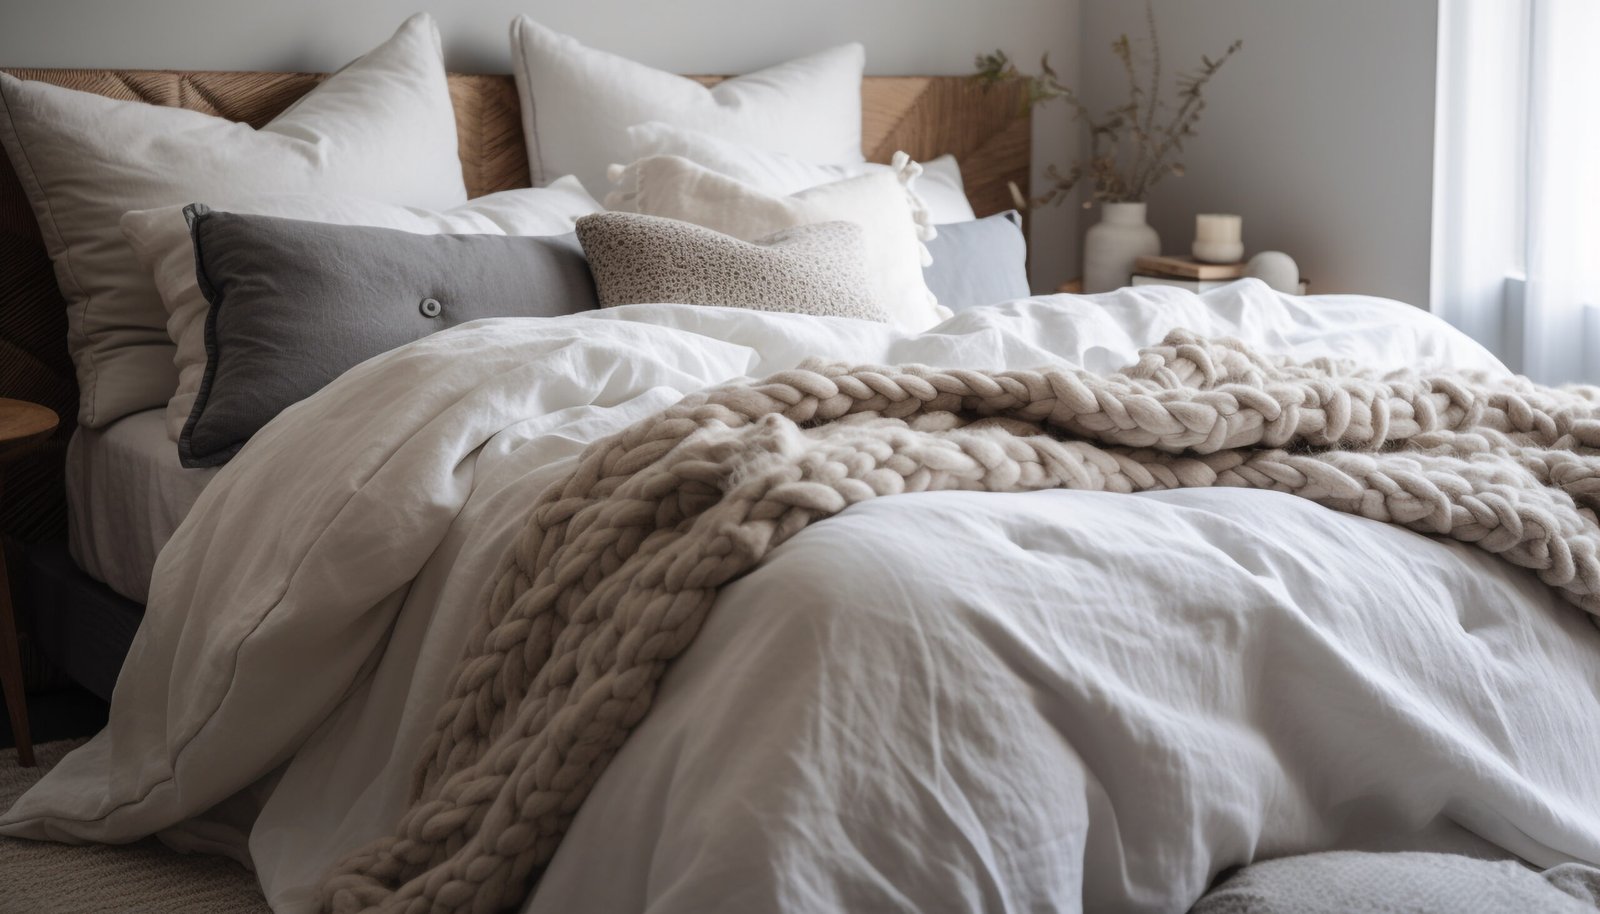 Softness and luxury on modern hotel bedding.